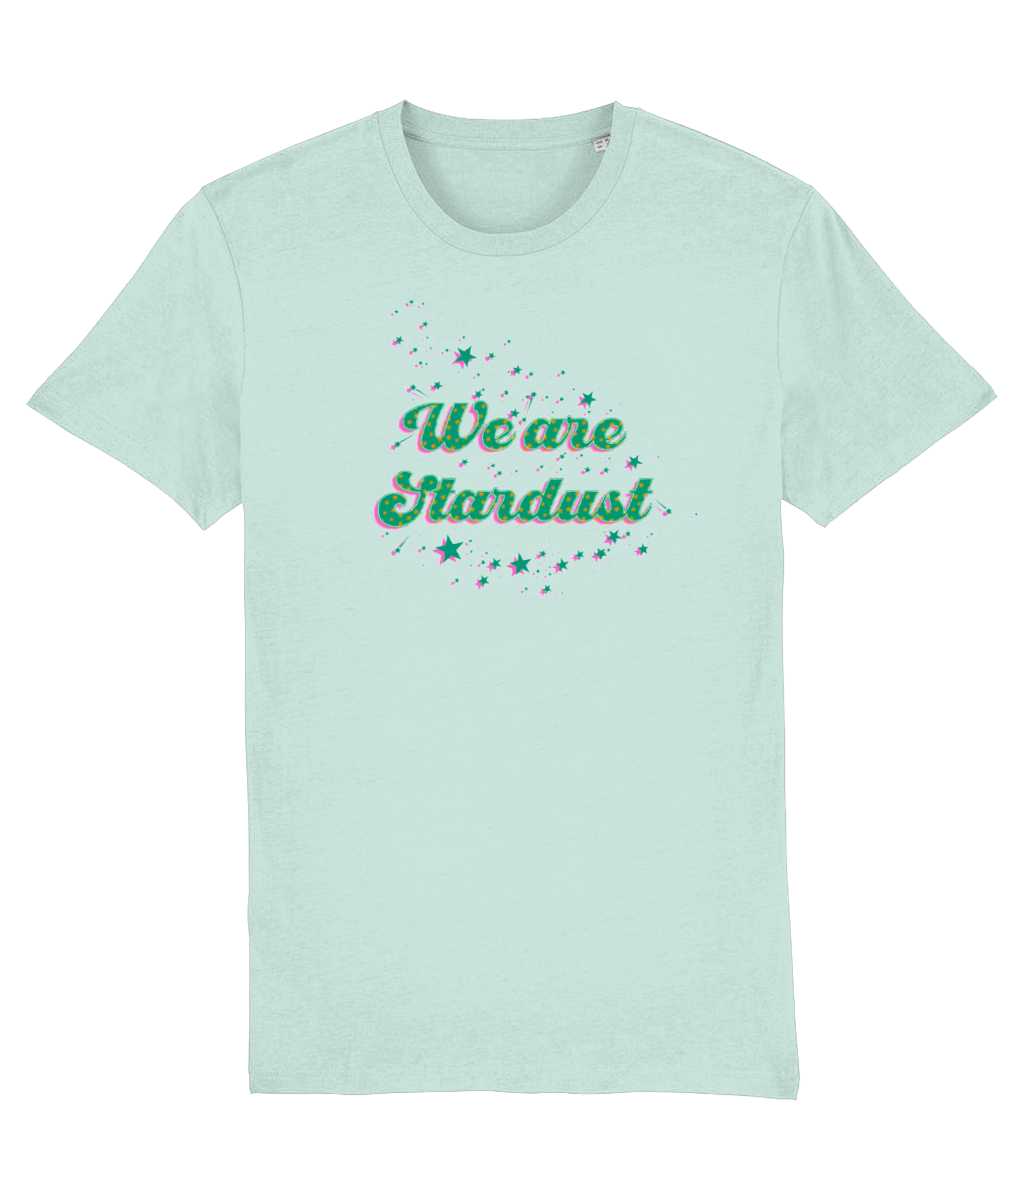 We are Stardust non gender organic T-Shirt- Emerald print Cherchez La Femme brand